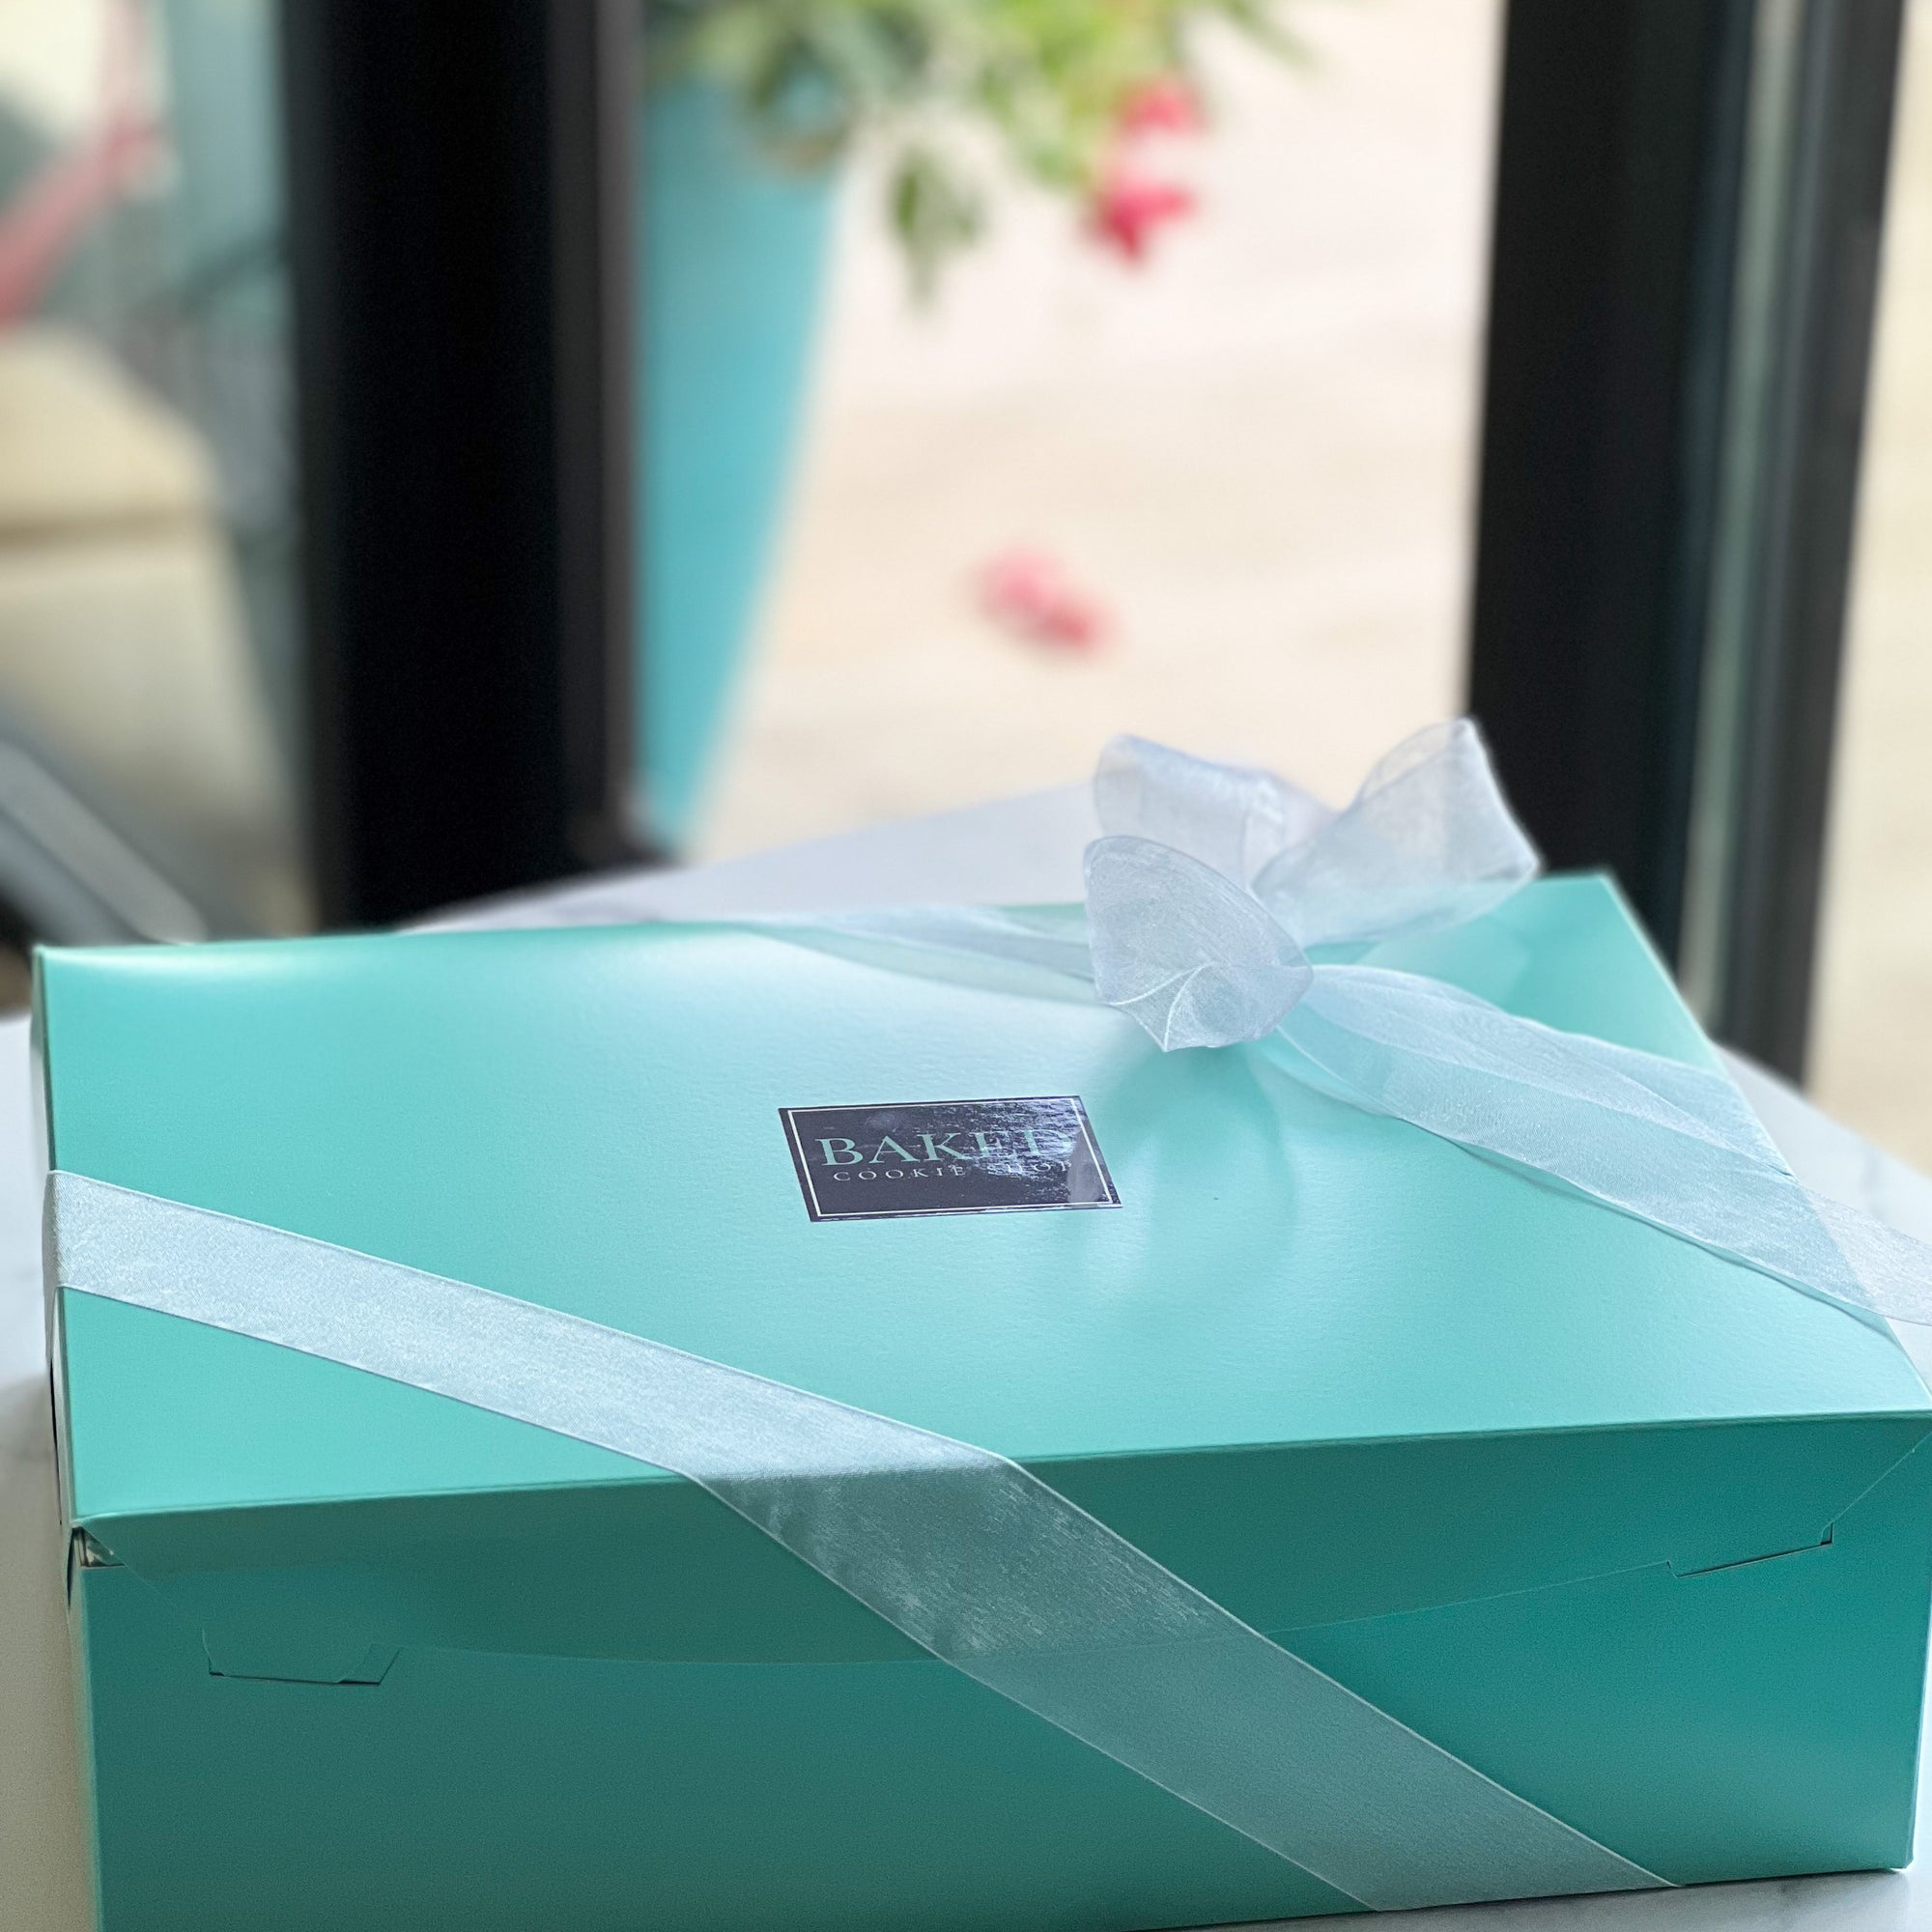 Baked Gift Box #3